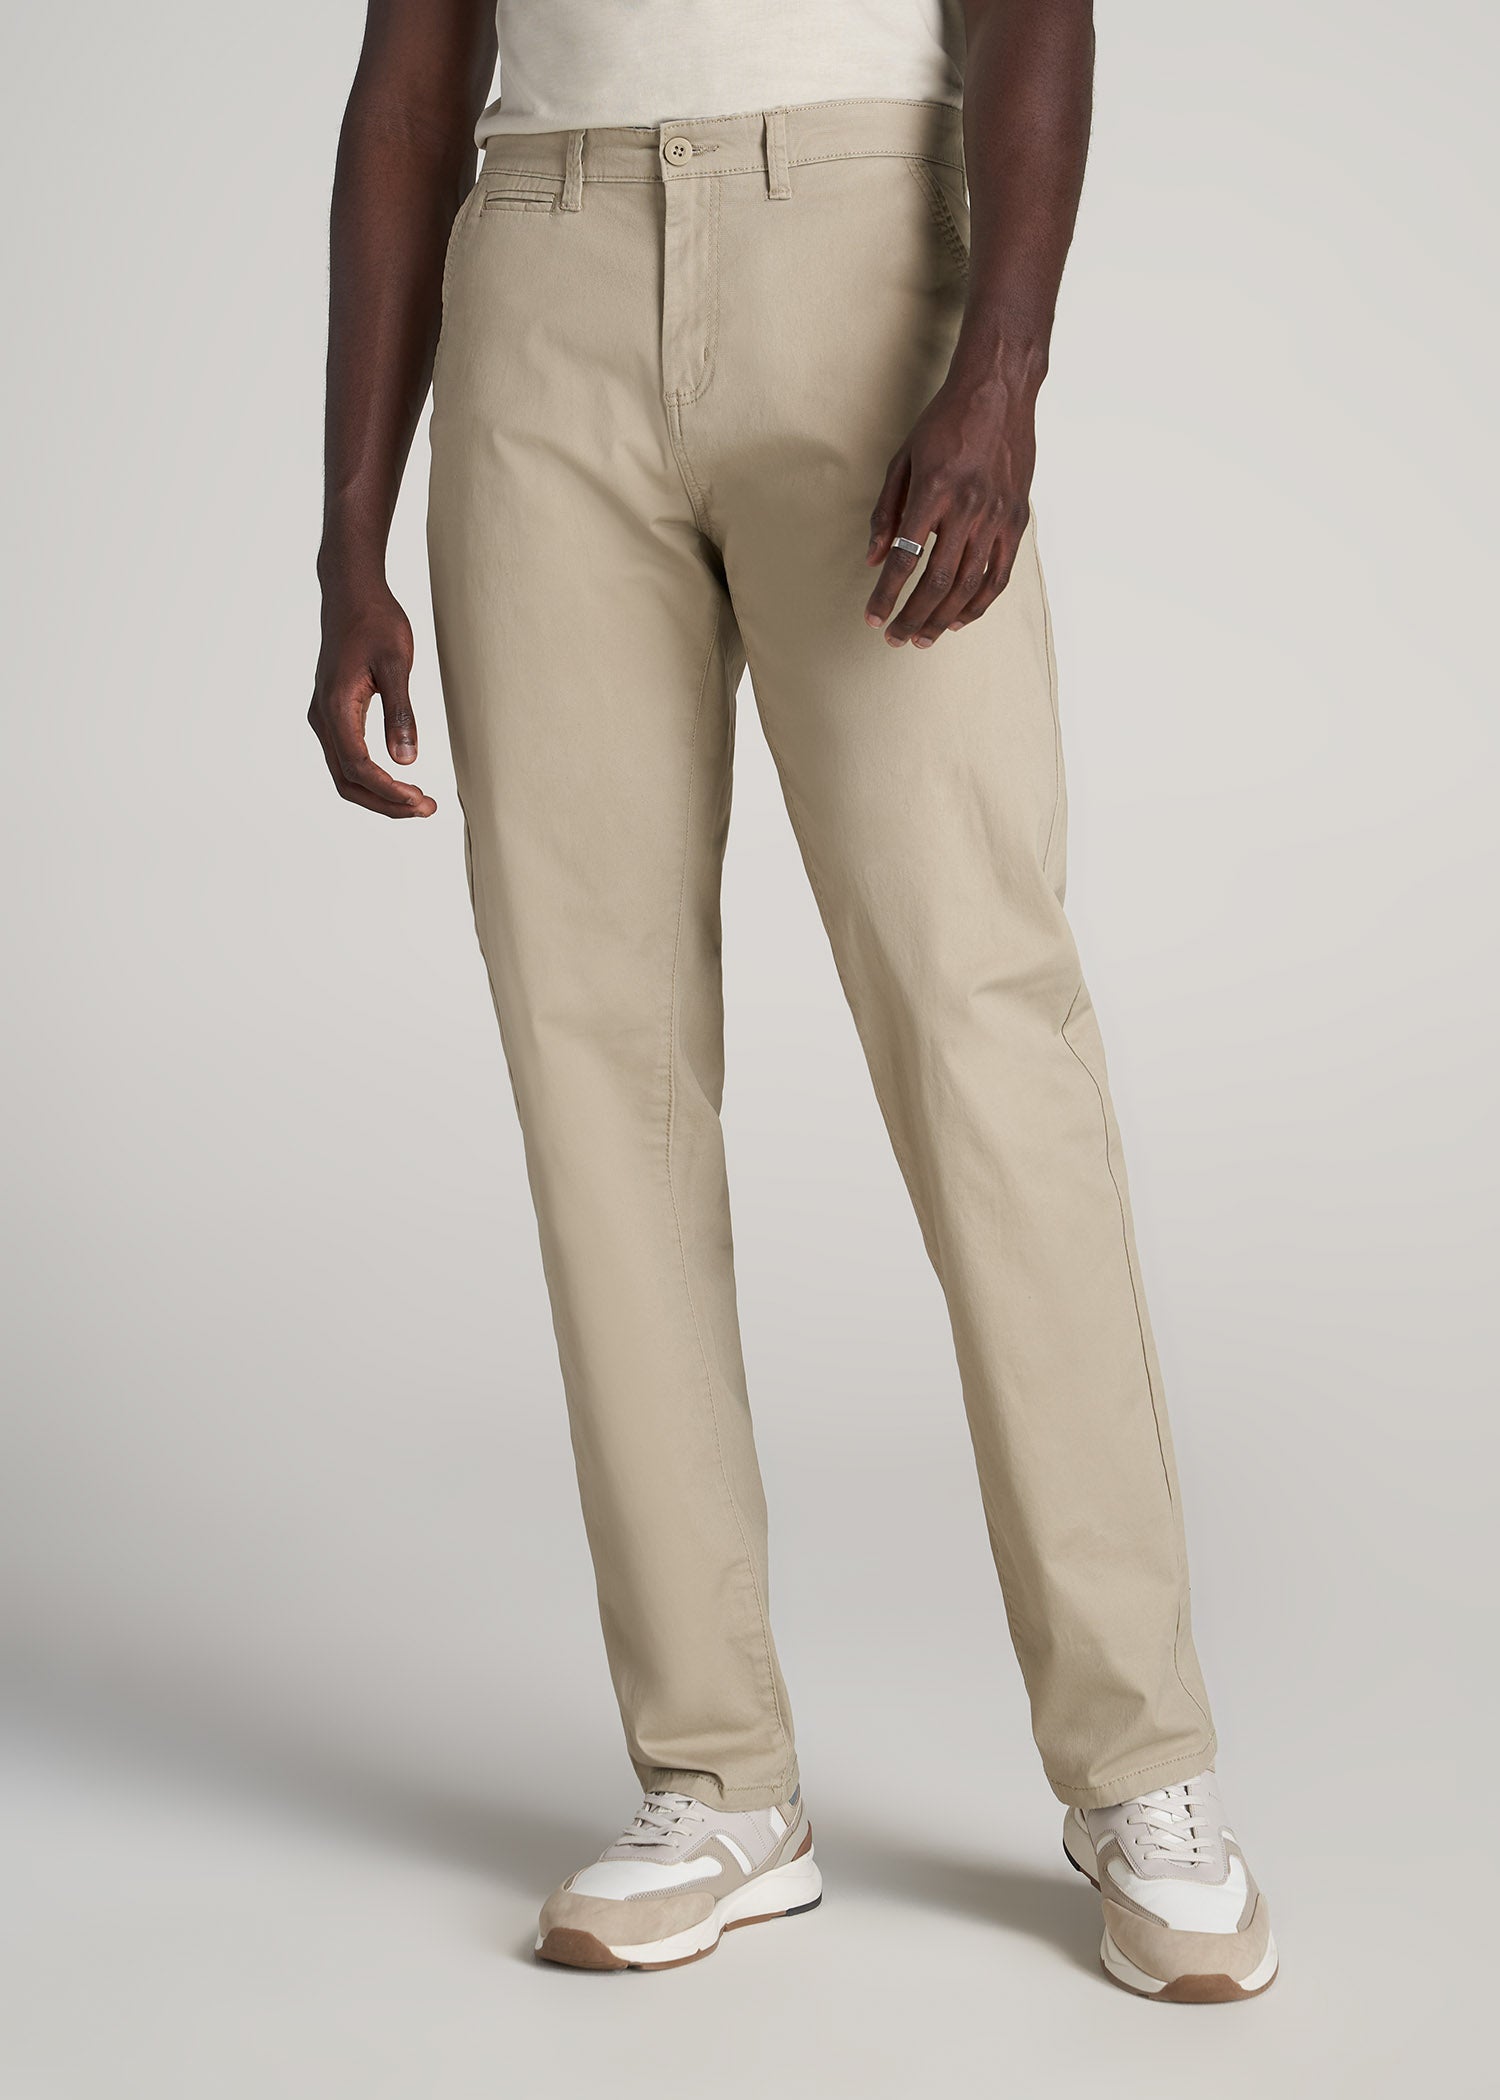 Mason SEMI-RELAXED Chinos in Desert Khaki - Pants for Tall Men